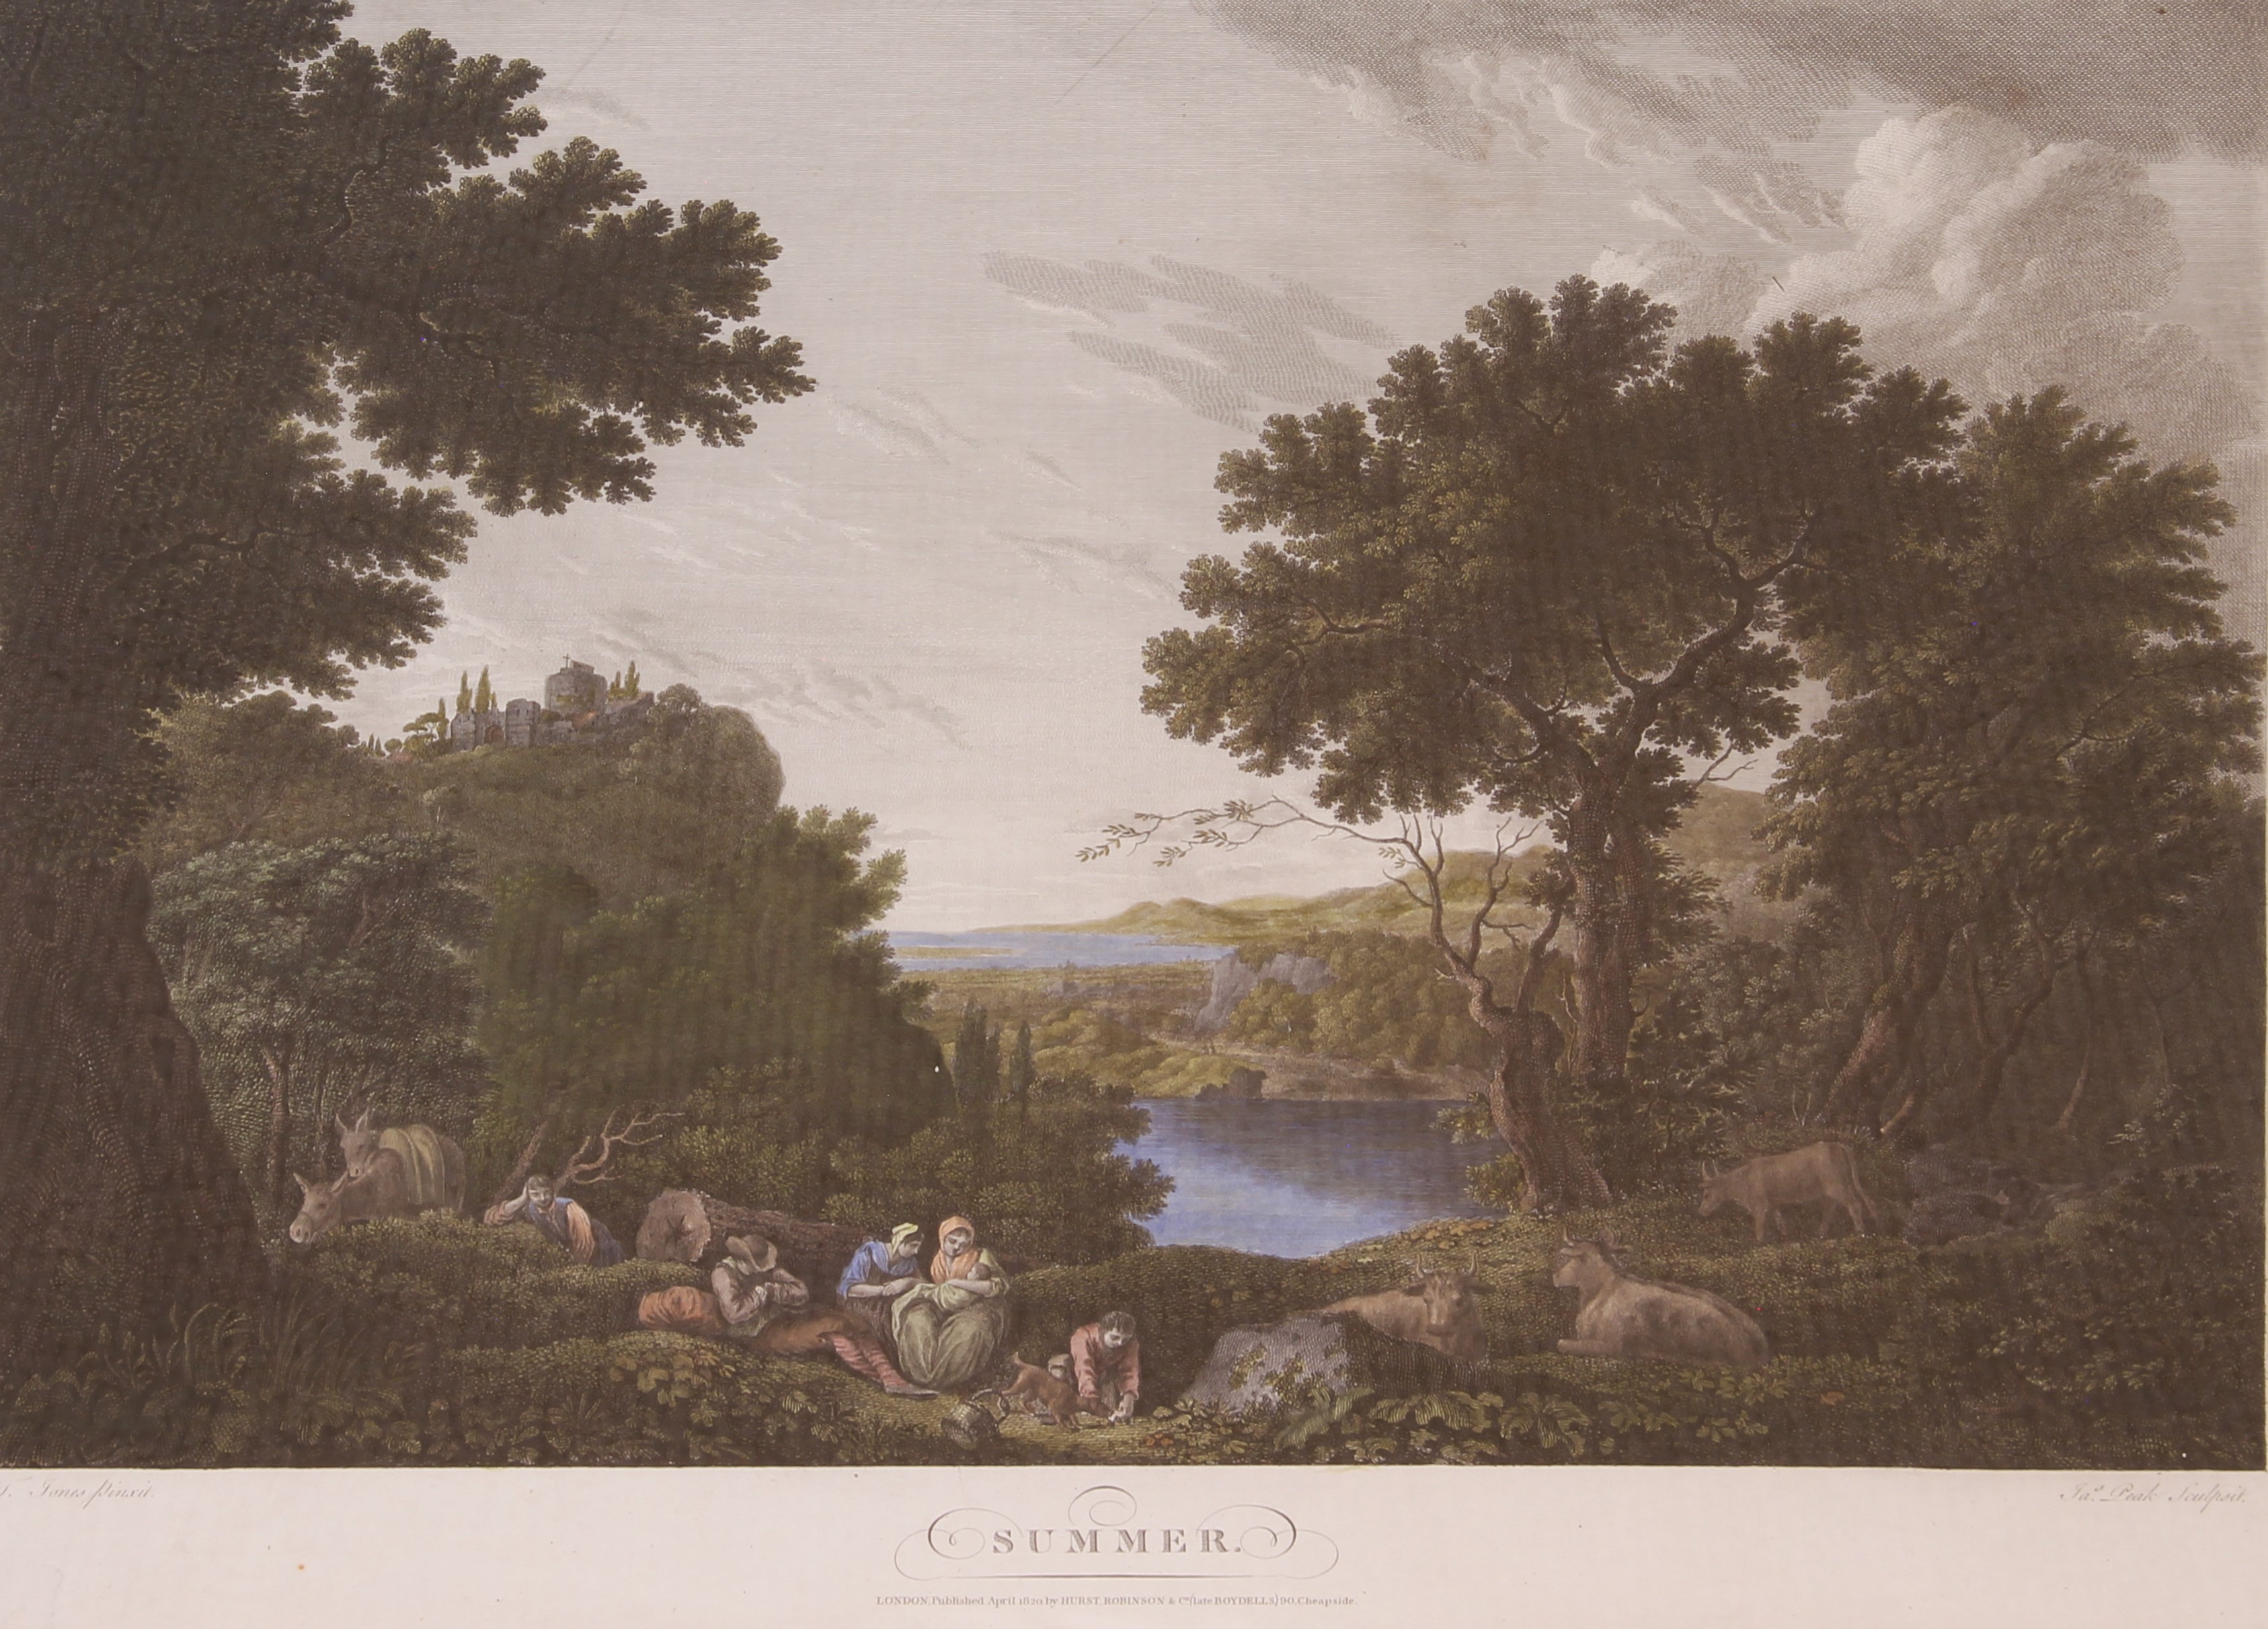 'Summer': a colour engraving by Peak after J. Jones - pub. London 1820, Hurst Robinson & Co., 17¾ - Image 2 of 7